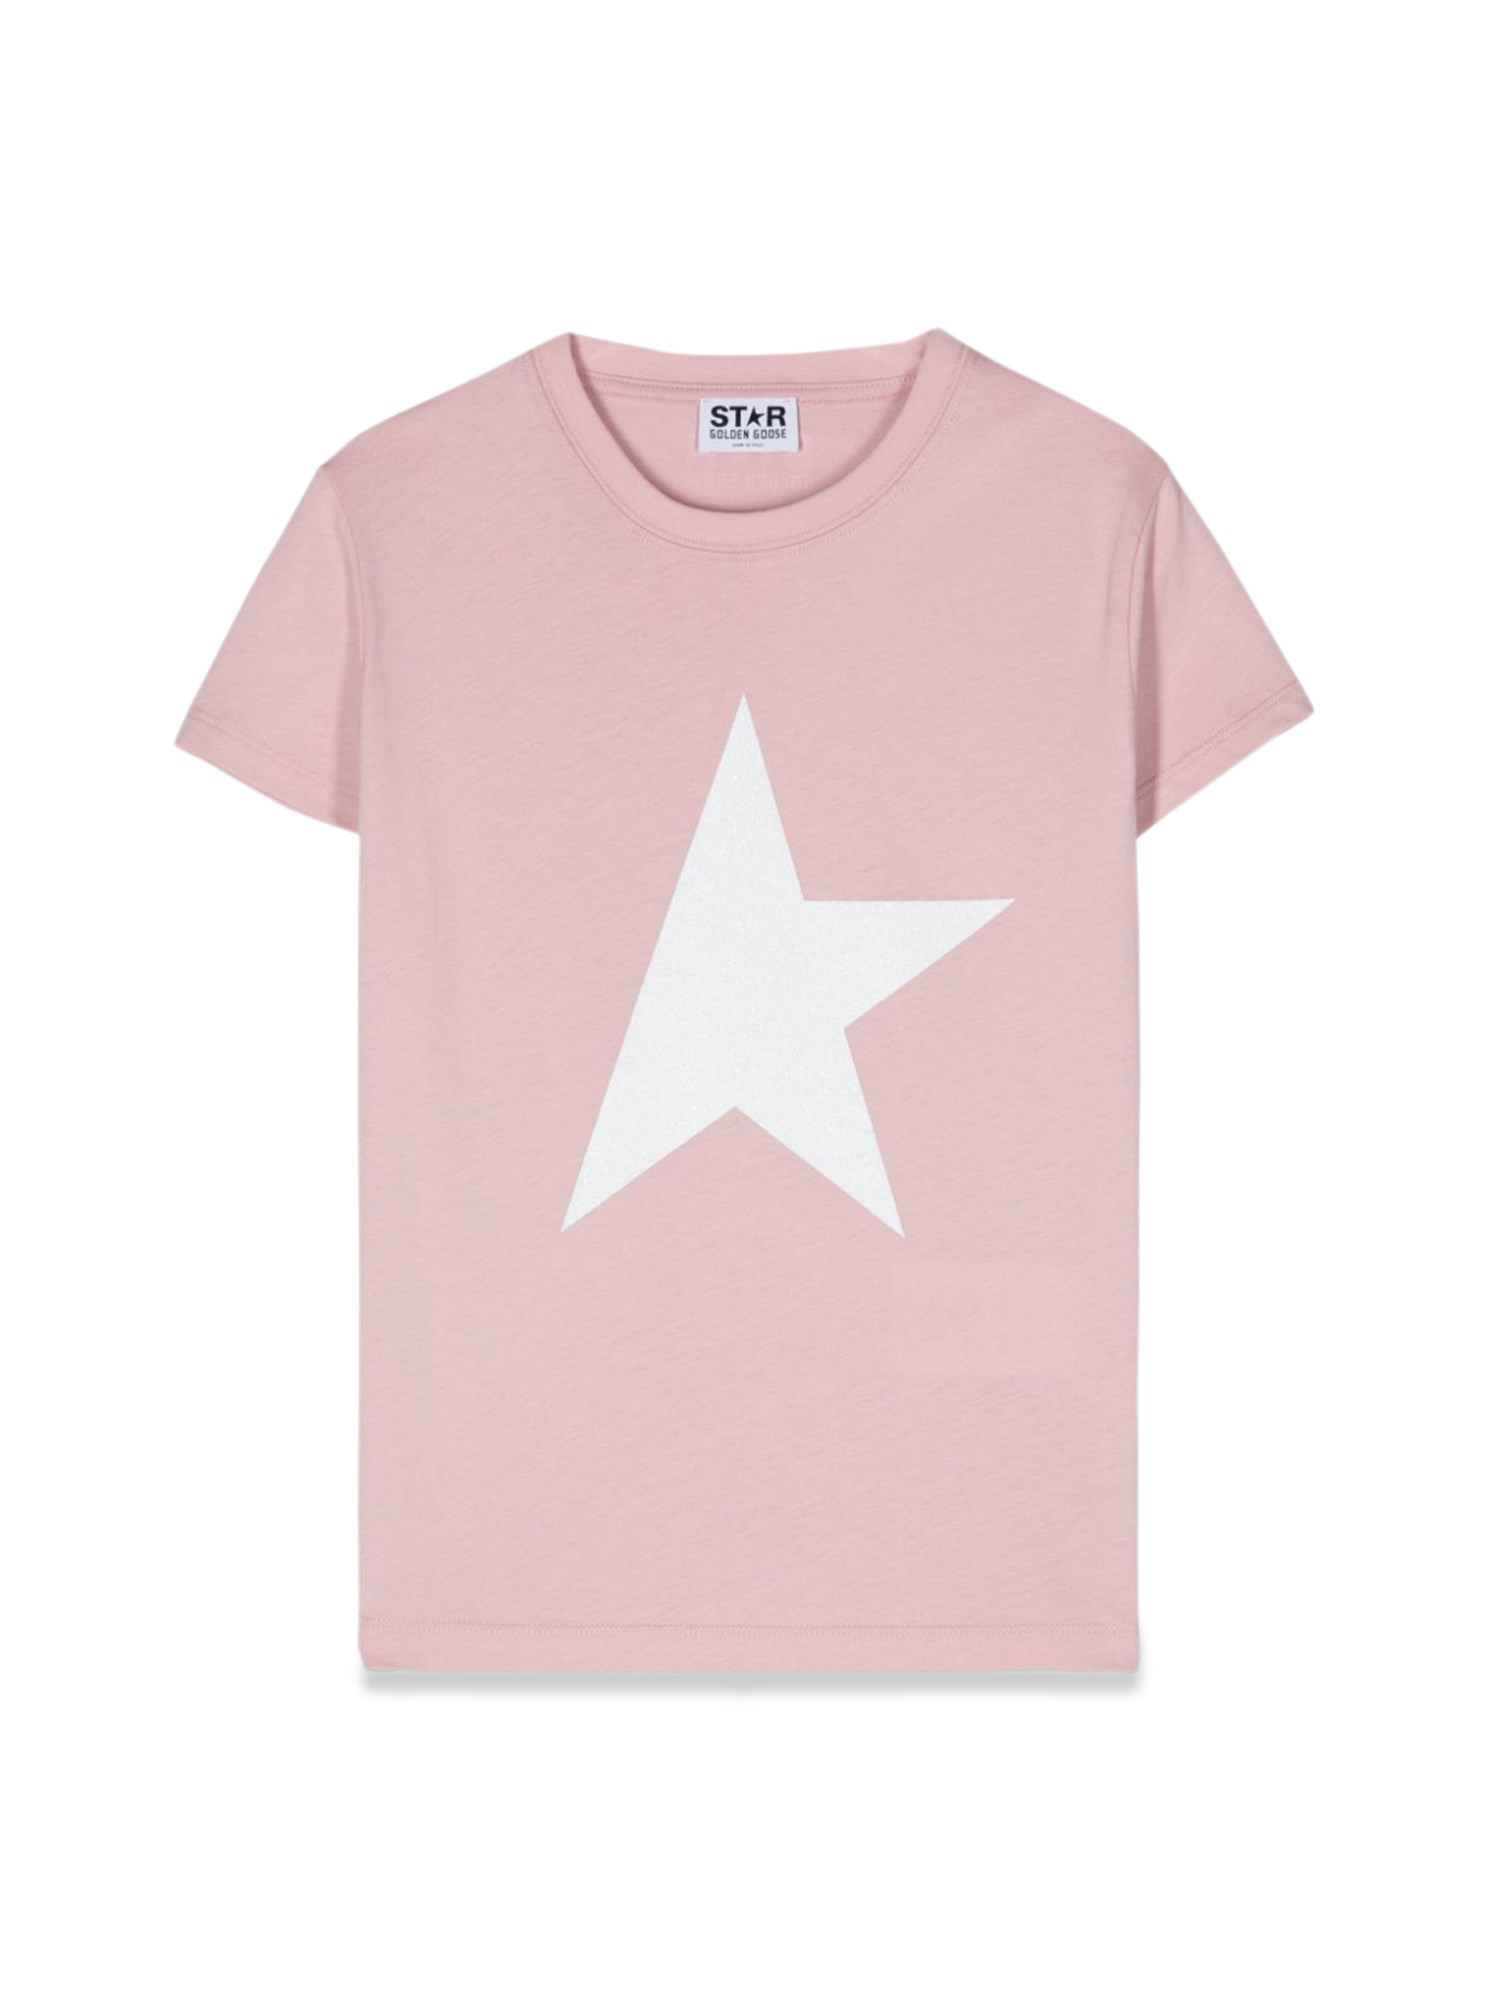 Golden Goose golden goose star/ girl's t-shirt s/s logo/ big star printed/ logo